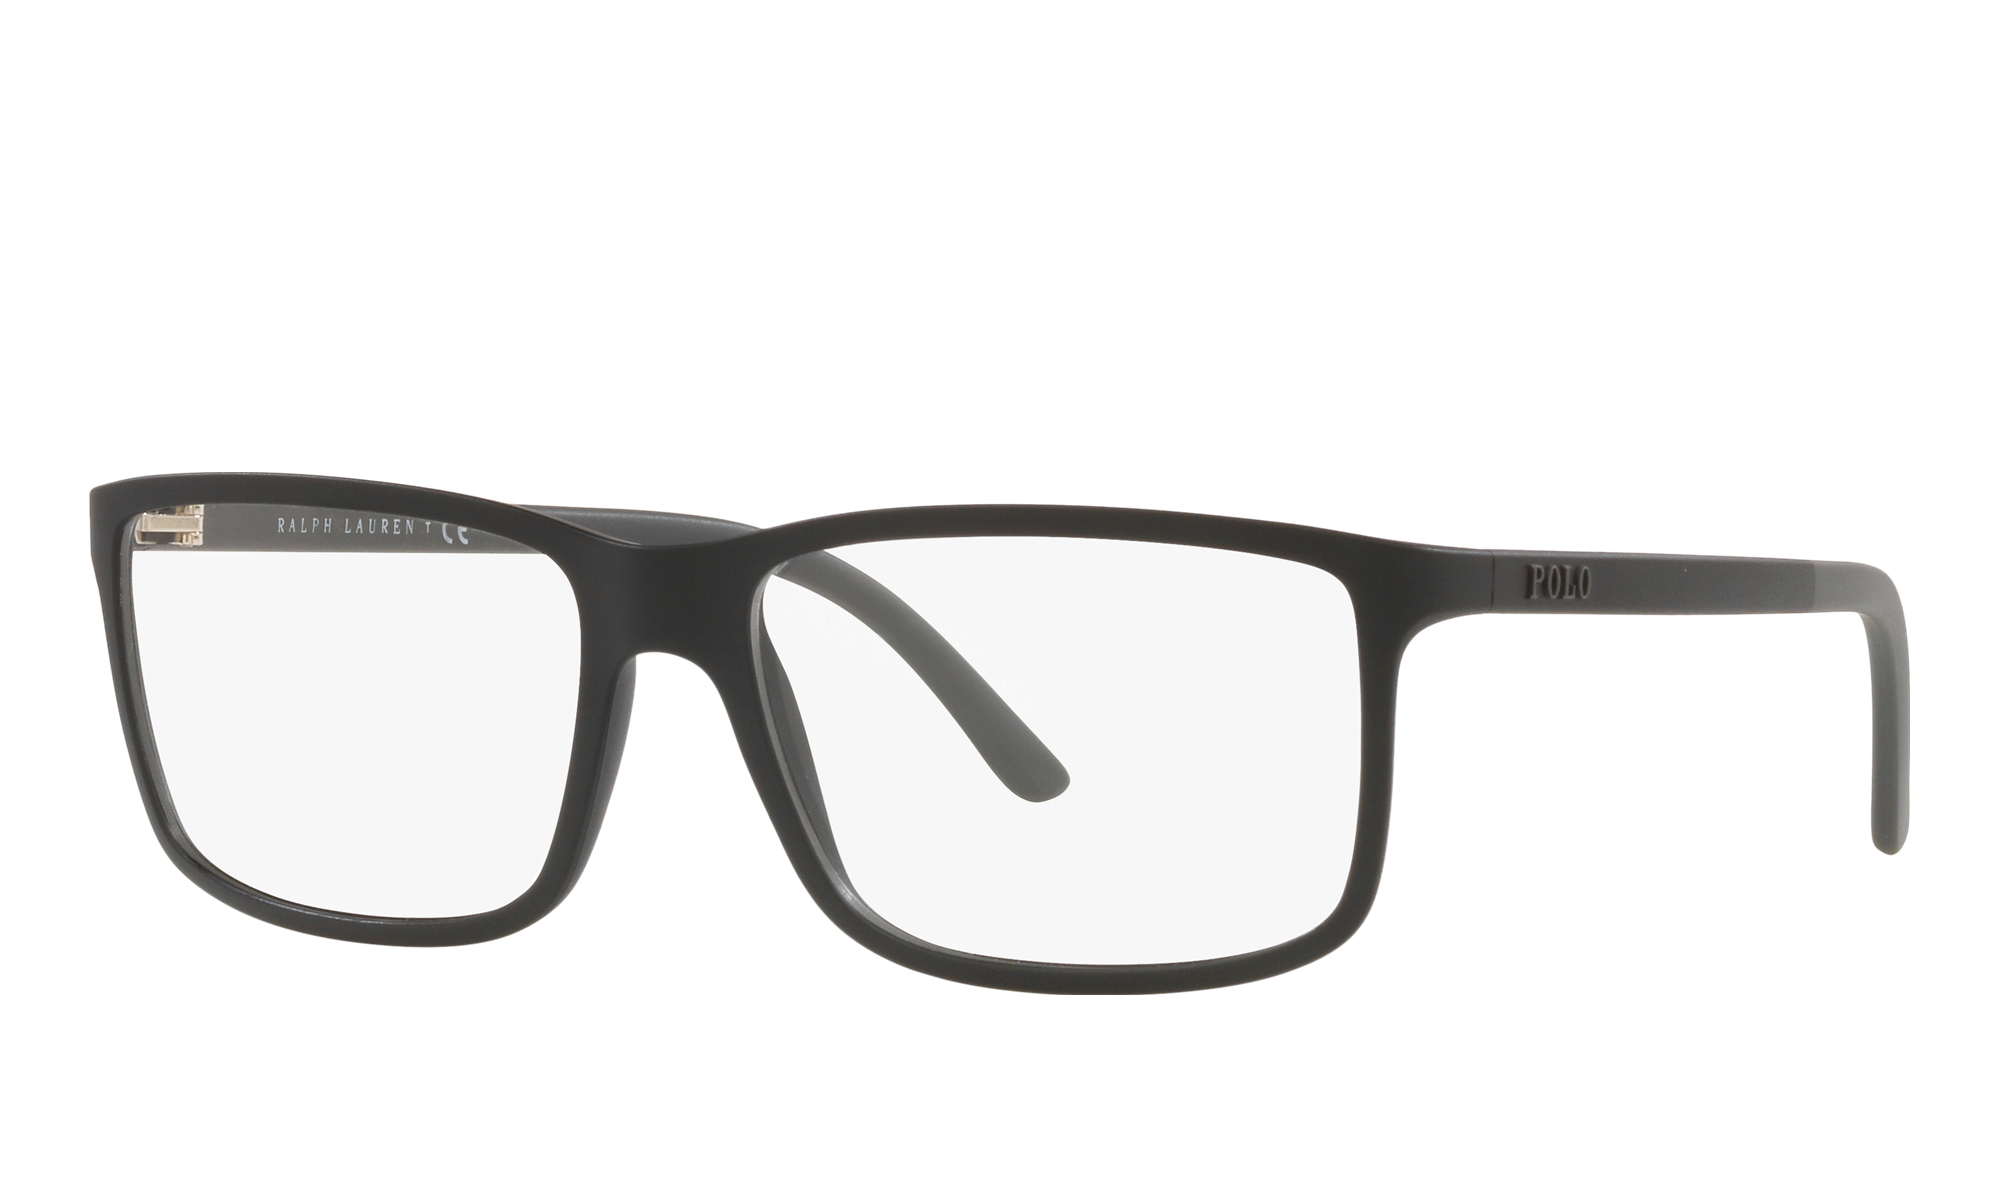 Polo Ralph Lauren Ph2126 Matte Black Eyeglasses ® Free